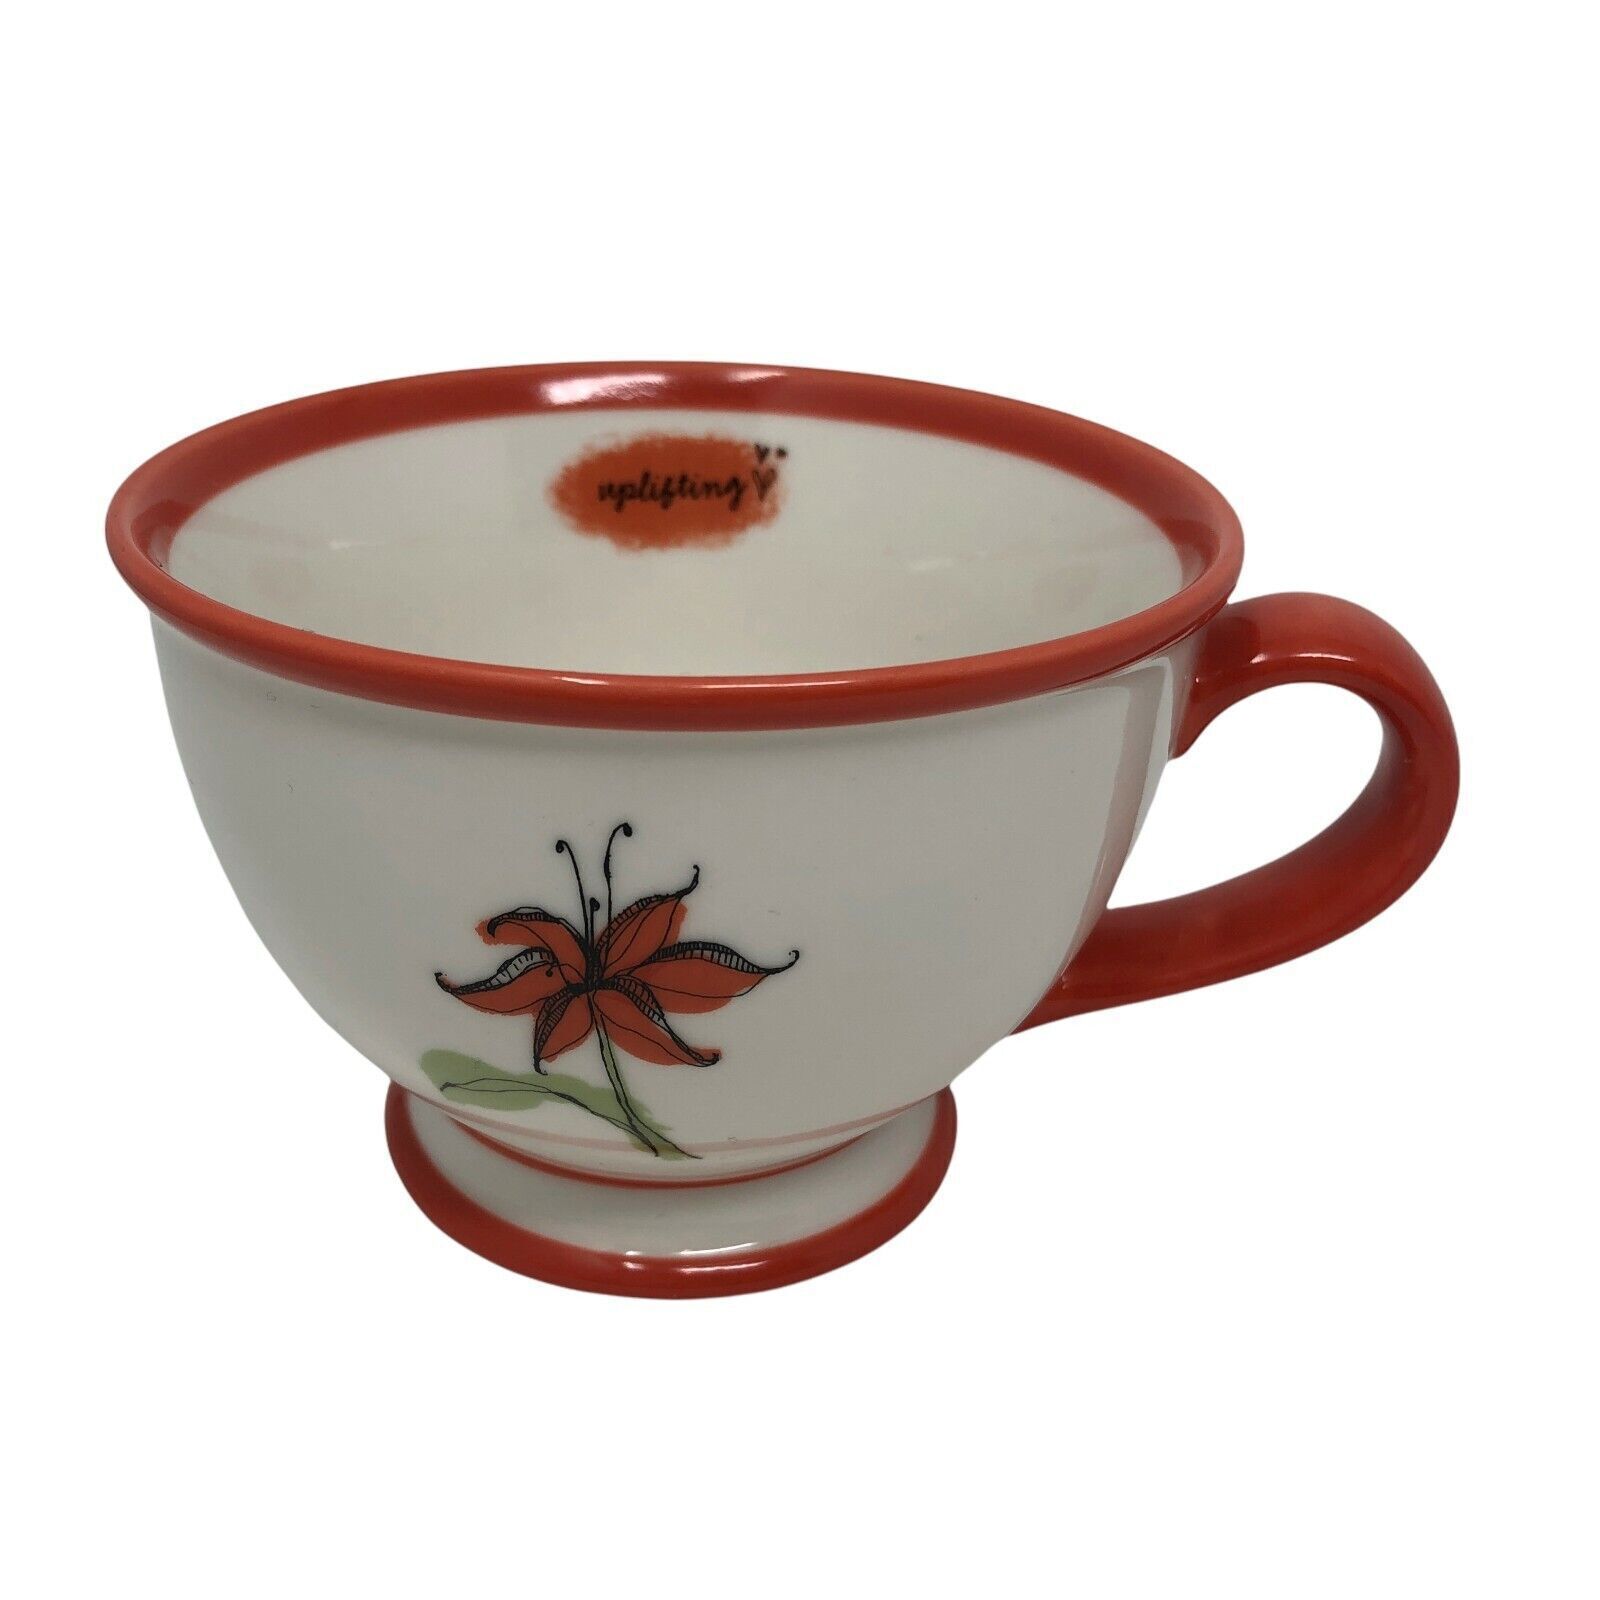 Starbucks Coffee Mug 10oz “Uplifting” Orange Tiger Lily 2006 Tea Cup NWOT